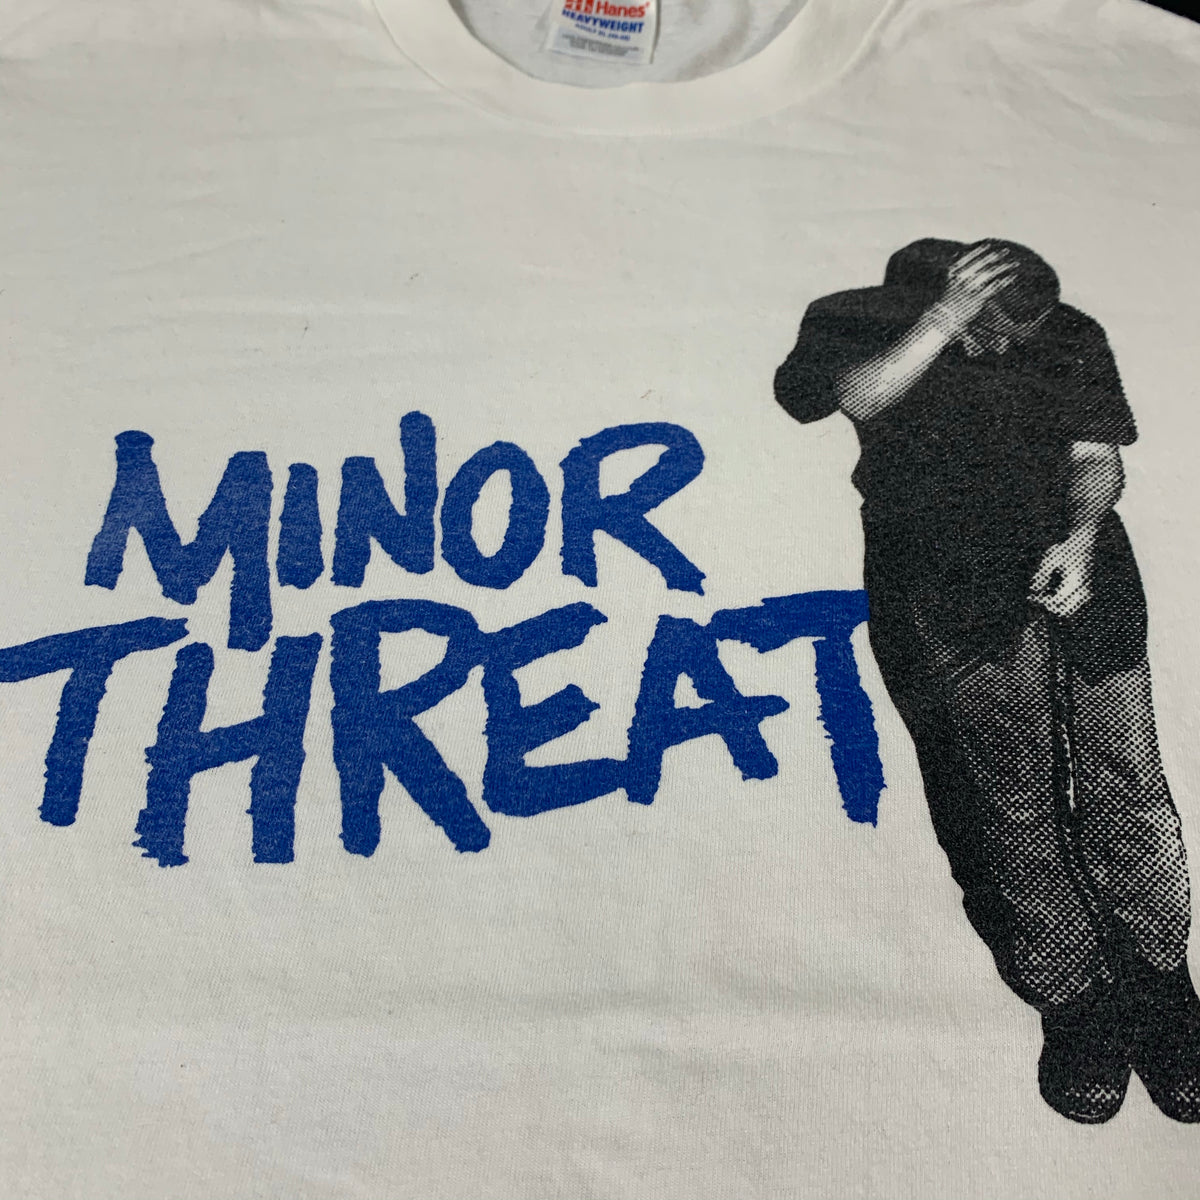 Vintage Minor Threat “Ian” T-Shirt